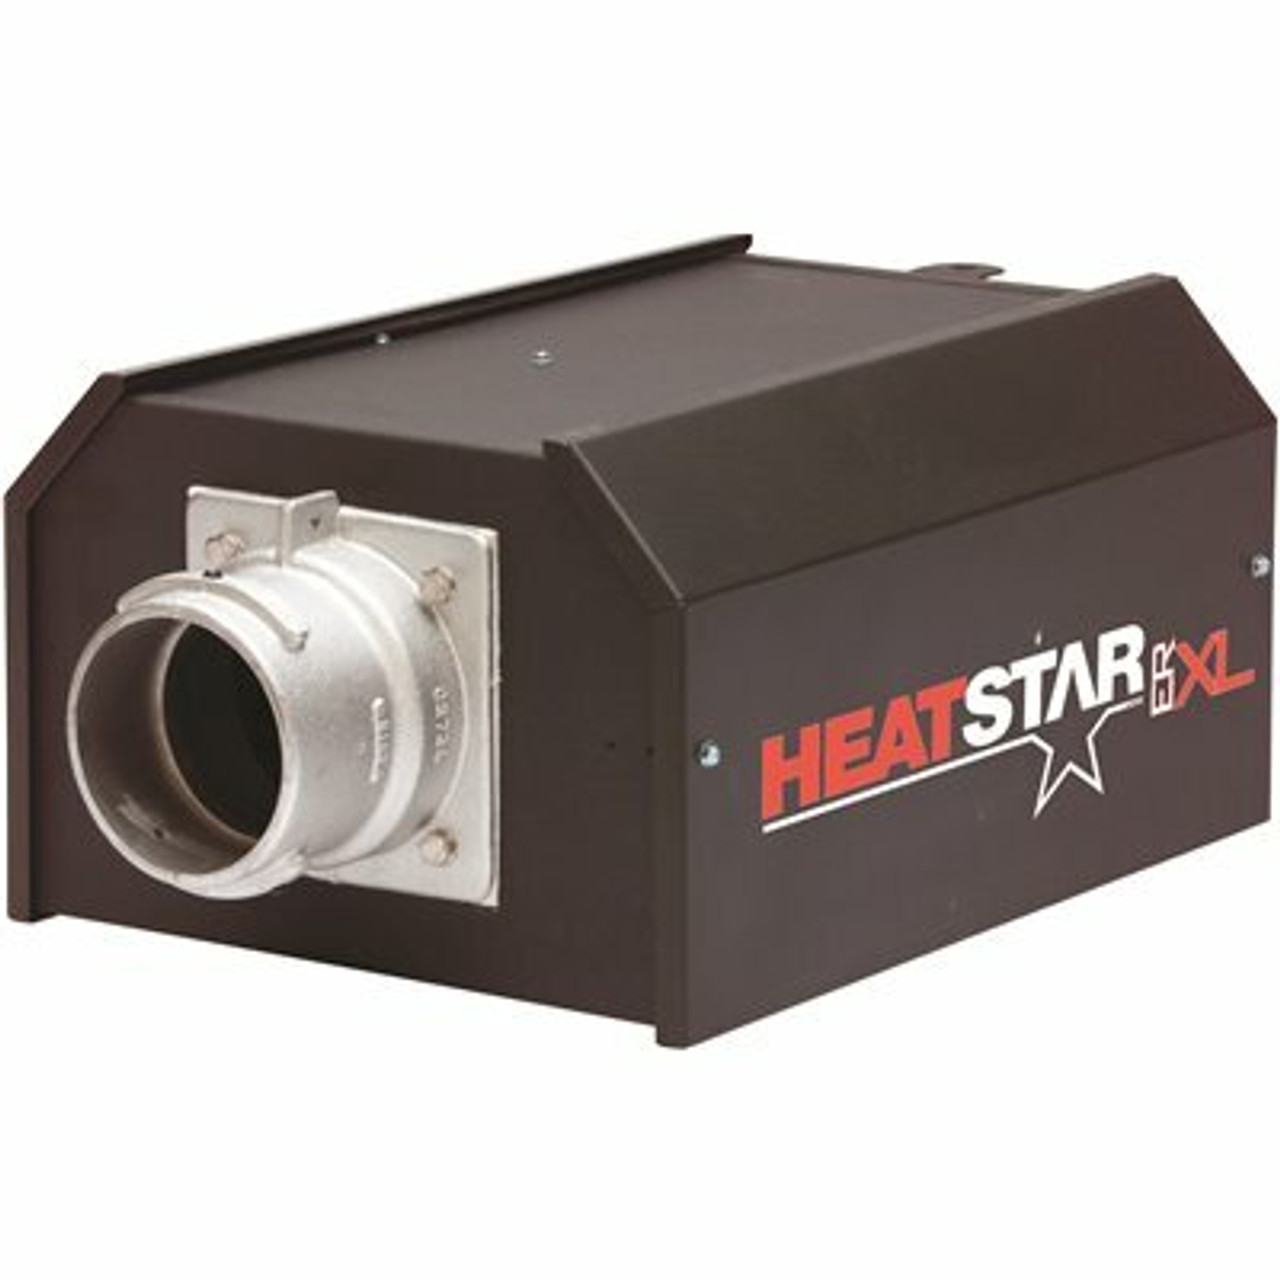 Heatstar Erxl 60,000 Btu Propane Single Stage Burner Box